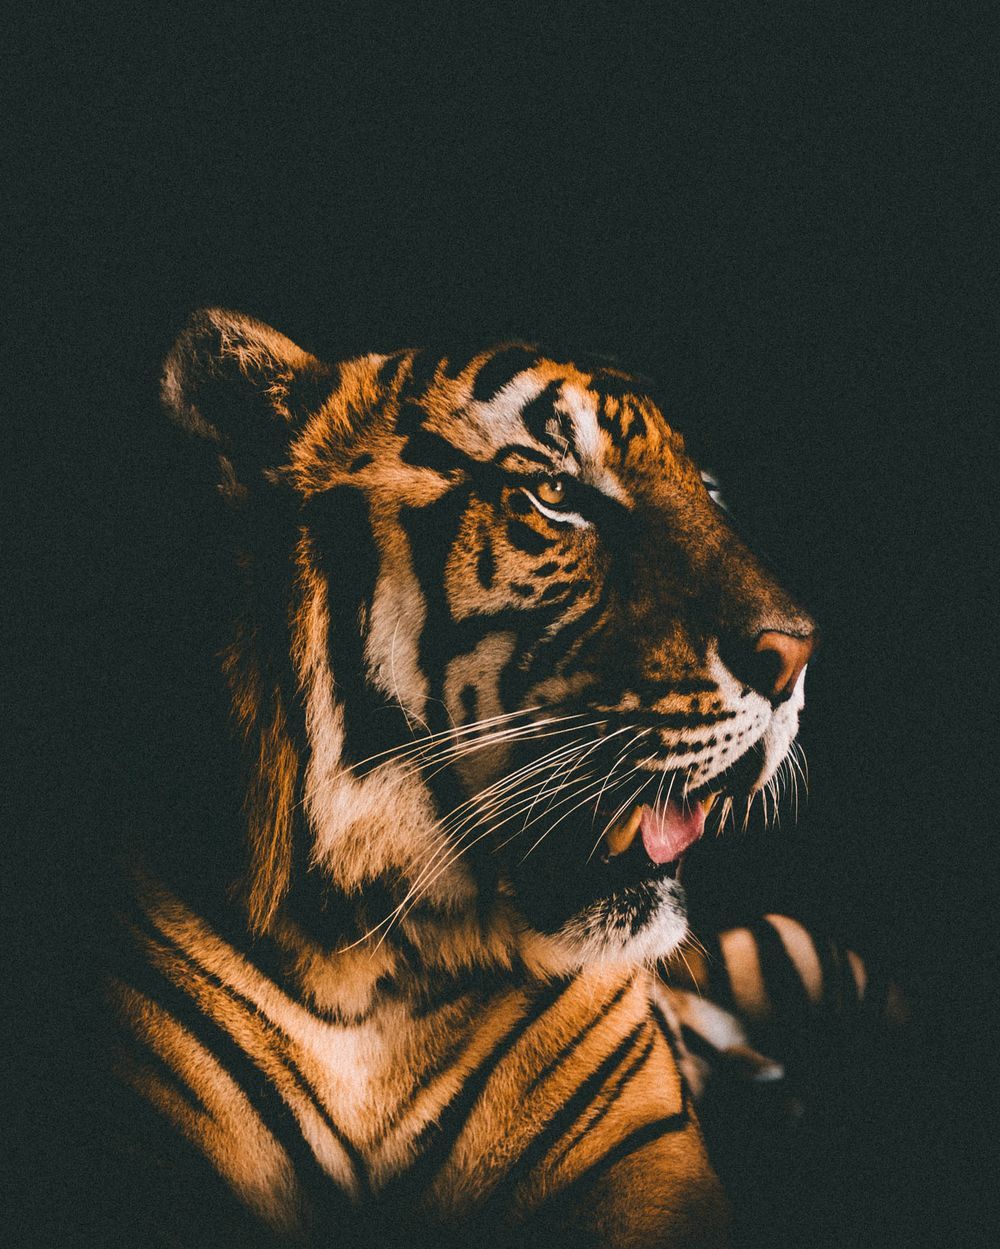 Wallpaper Tiger Image